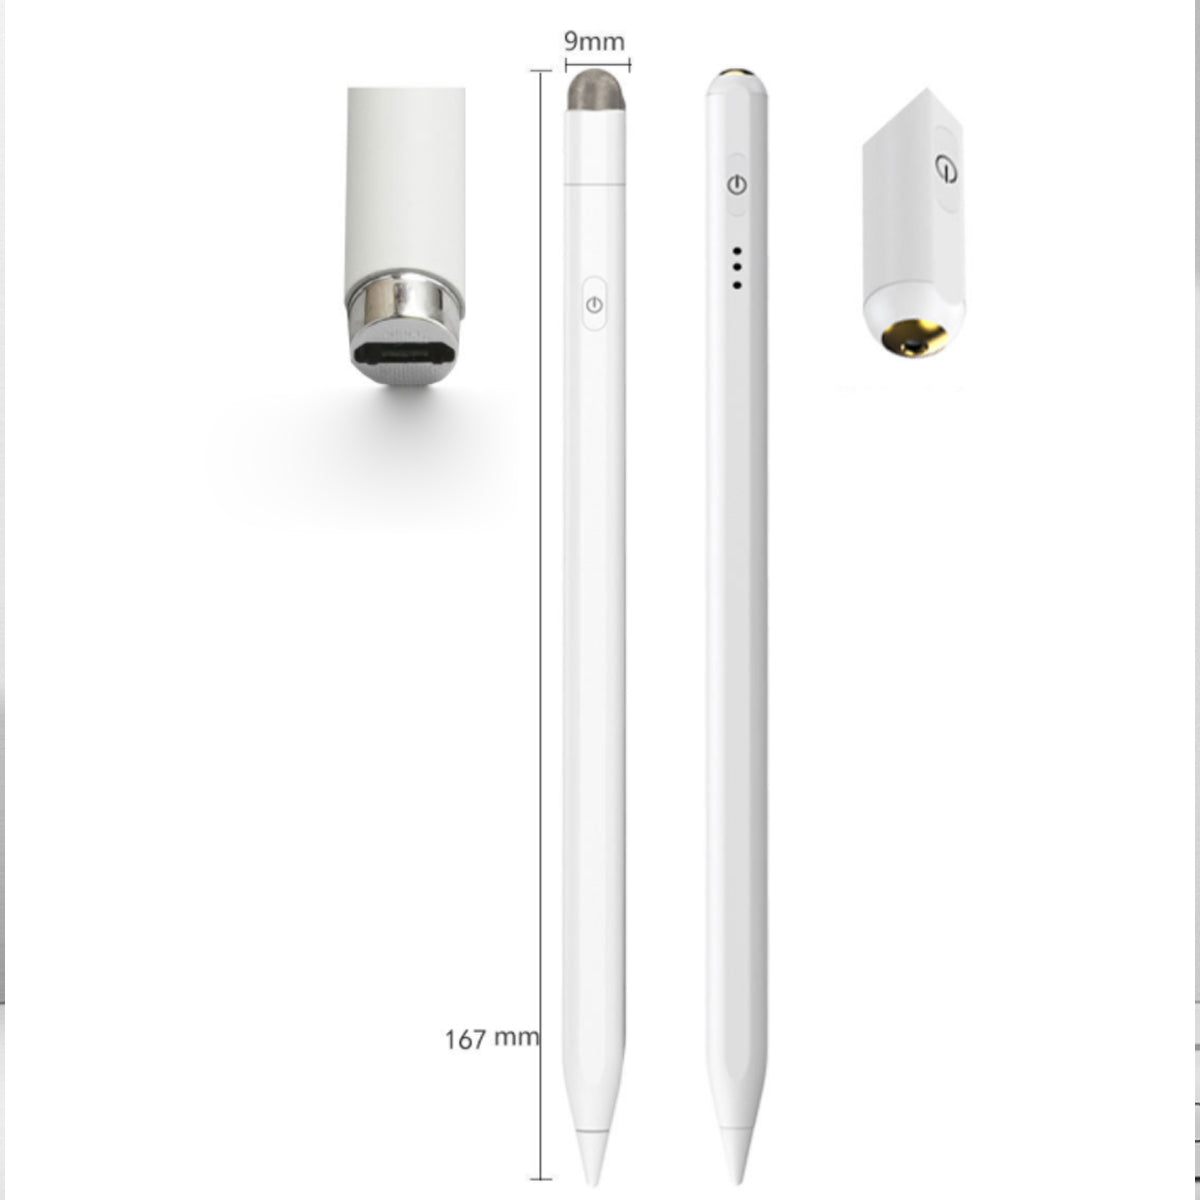  Digi Pencil for IPad and Tablets by VistaShops VistaShops Perfumarie